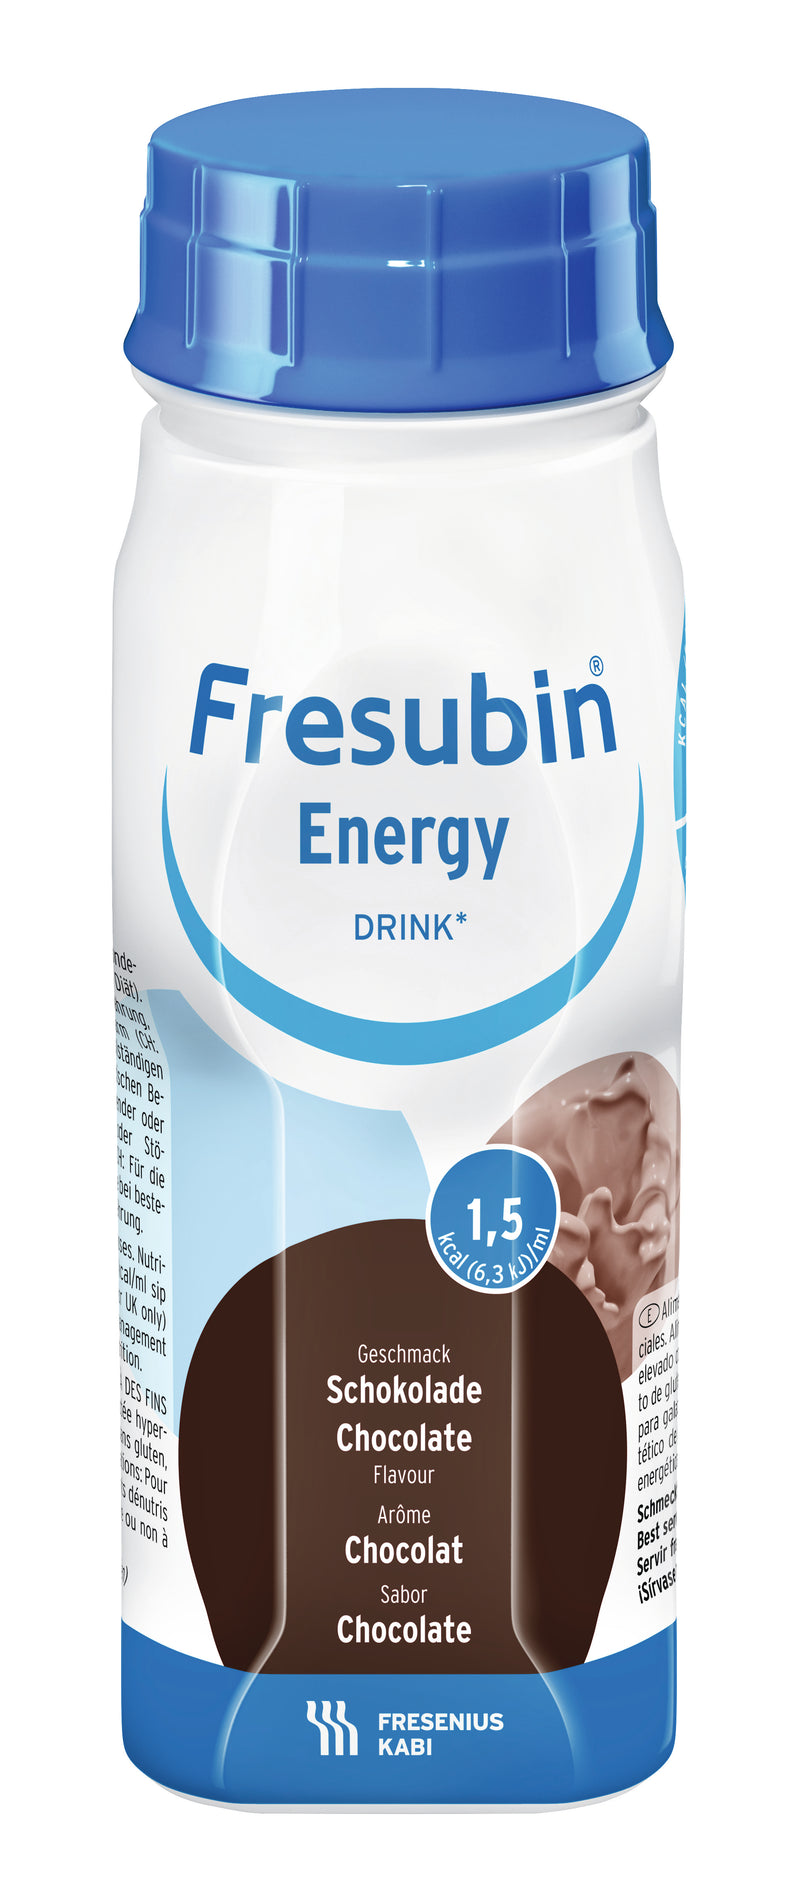 Fresubin Energy Drink 200mL | Pack of 4